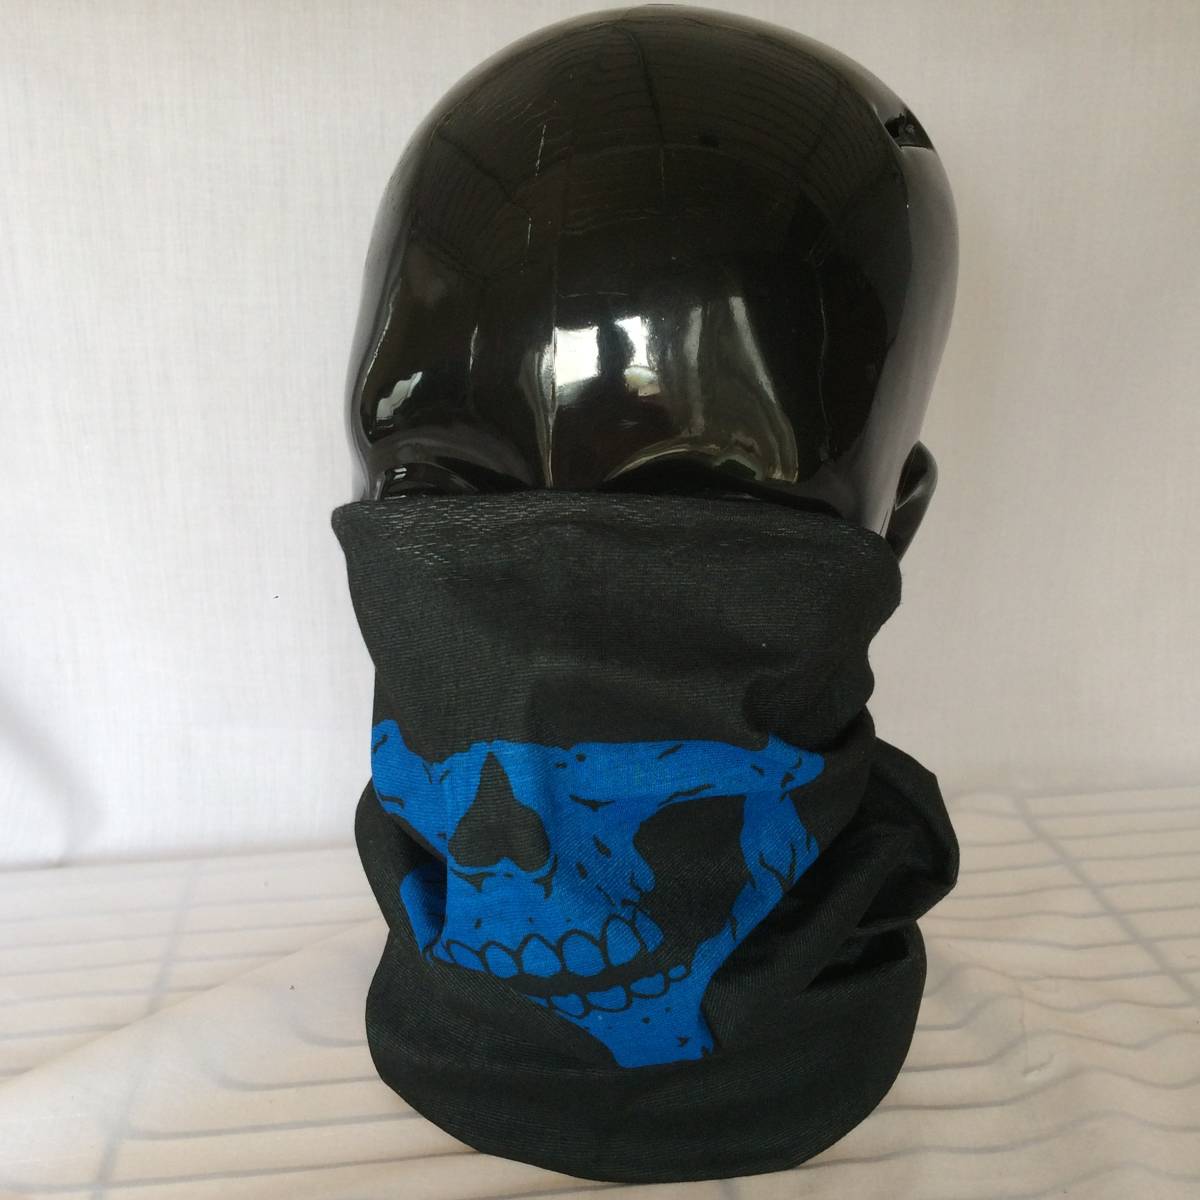  маска для лица маска MASK Skull зимний костюм gaikotsu каркас .. череп блокировка Biker 1579